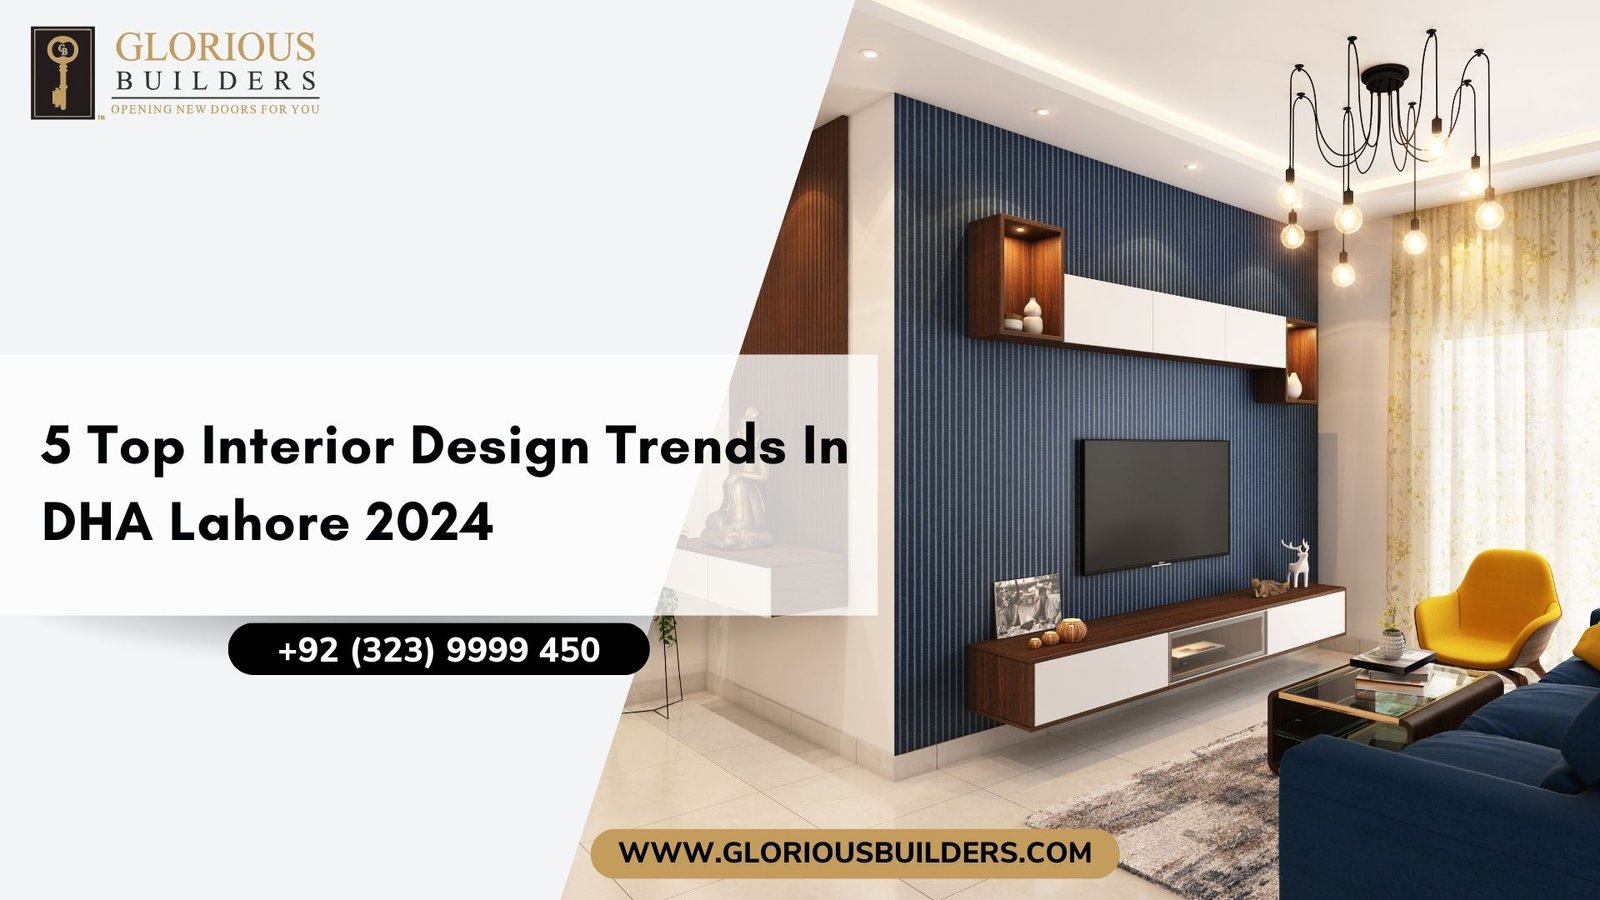 5 Top Interior Design Trends In DHA Lahore 2024